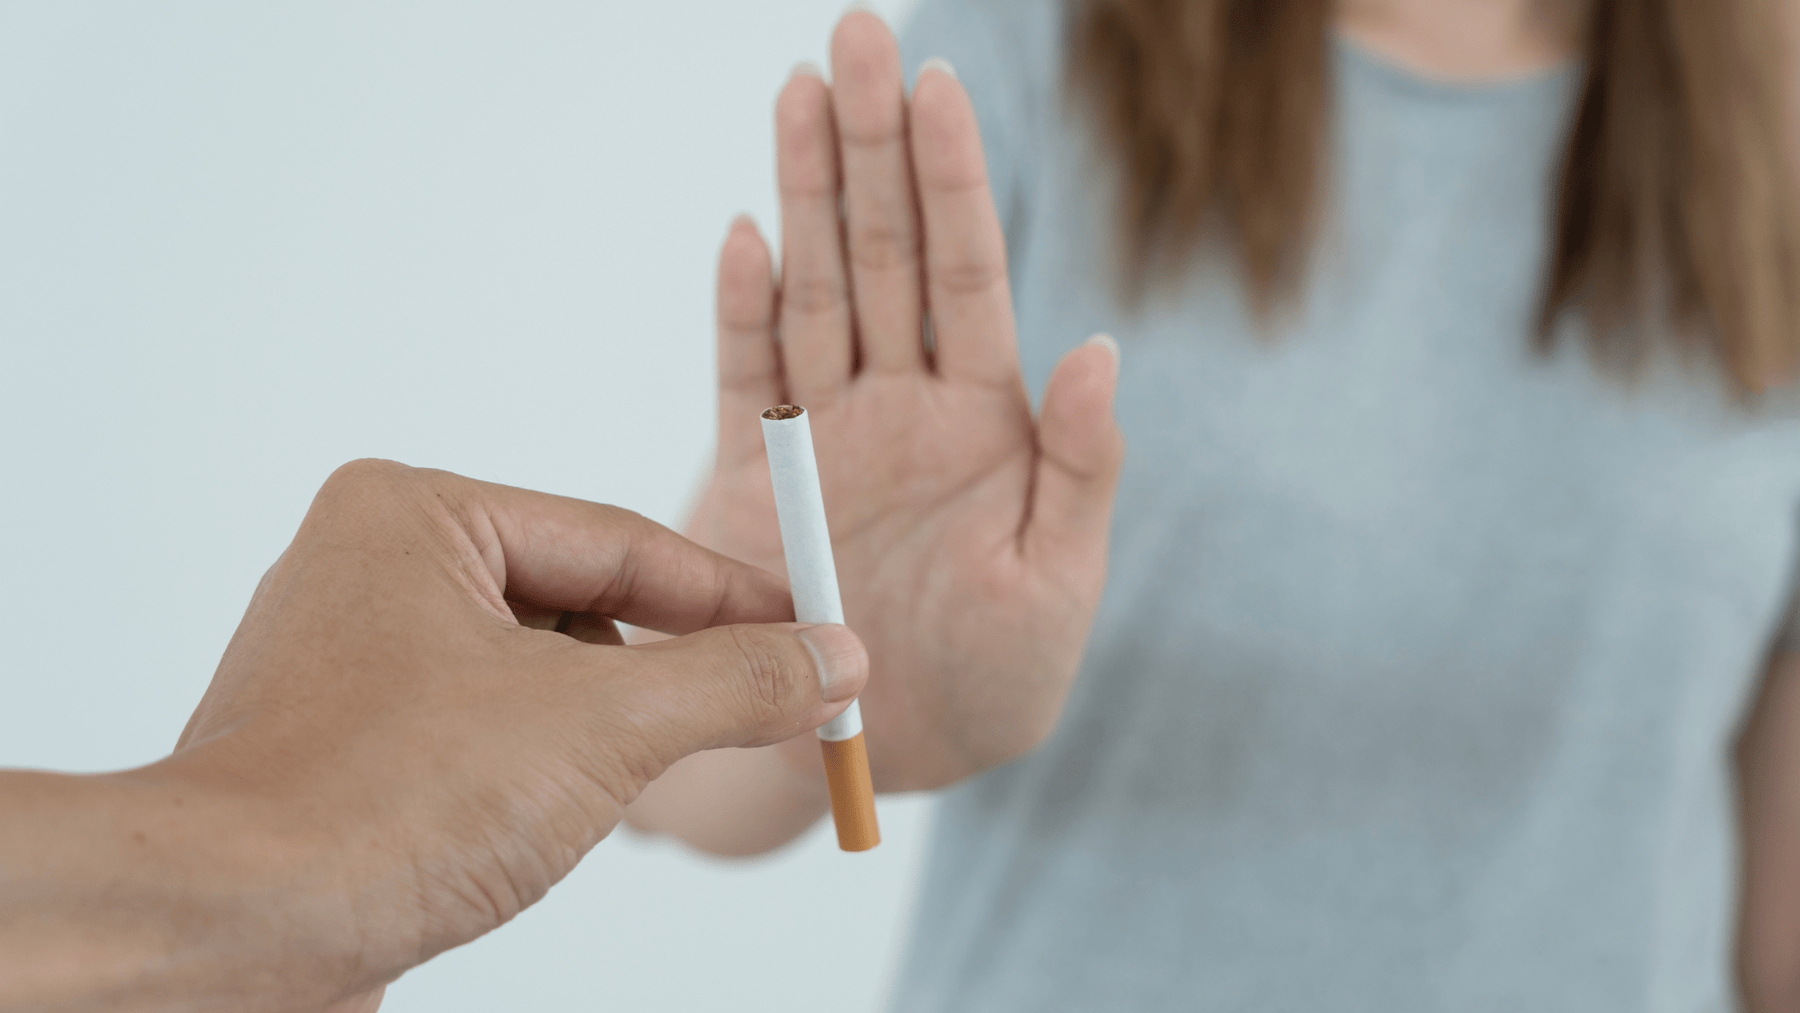 Tips to stop smoking and nicotine cravings